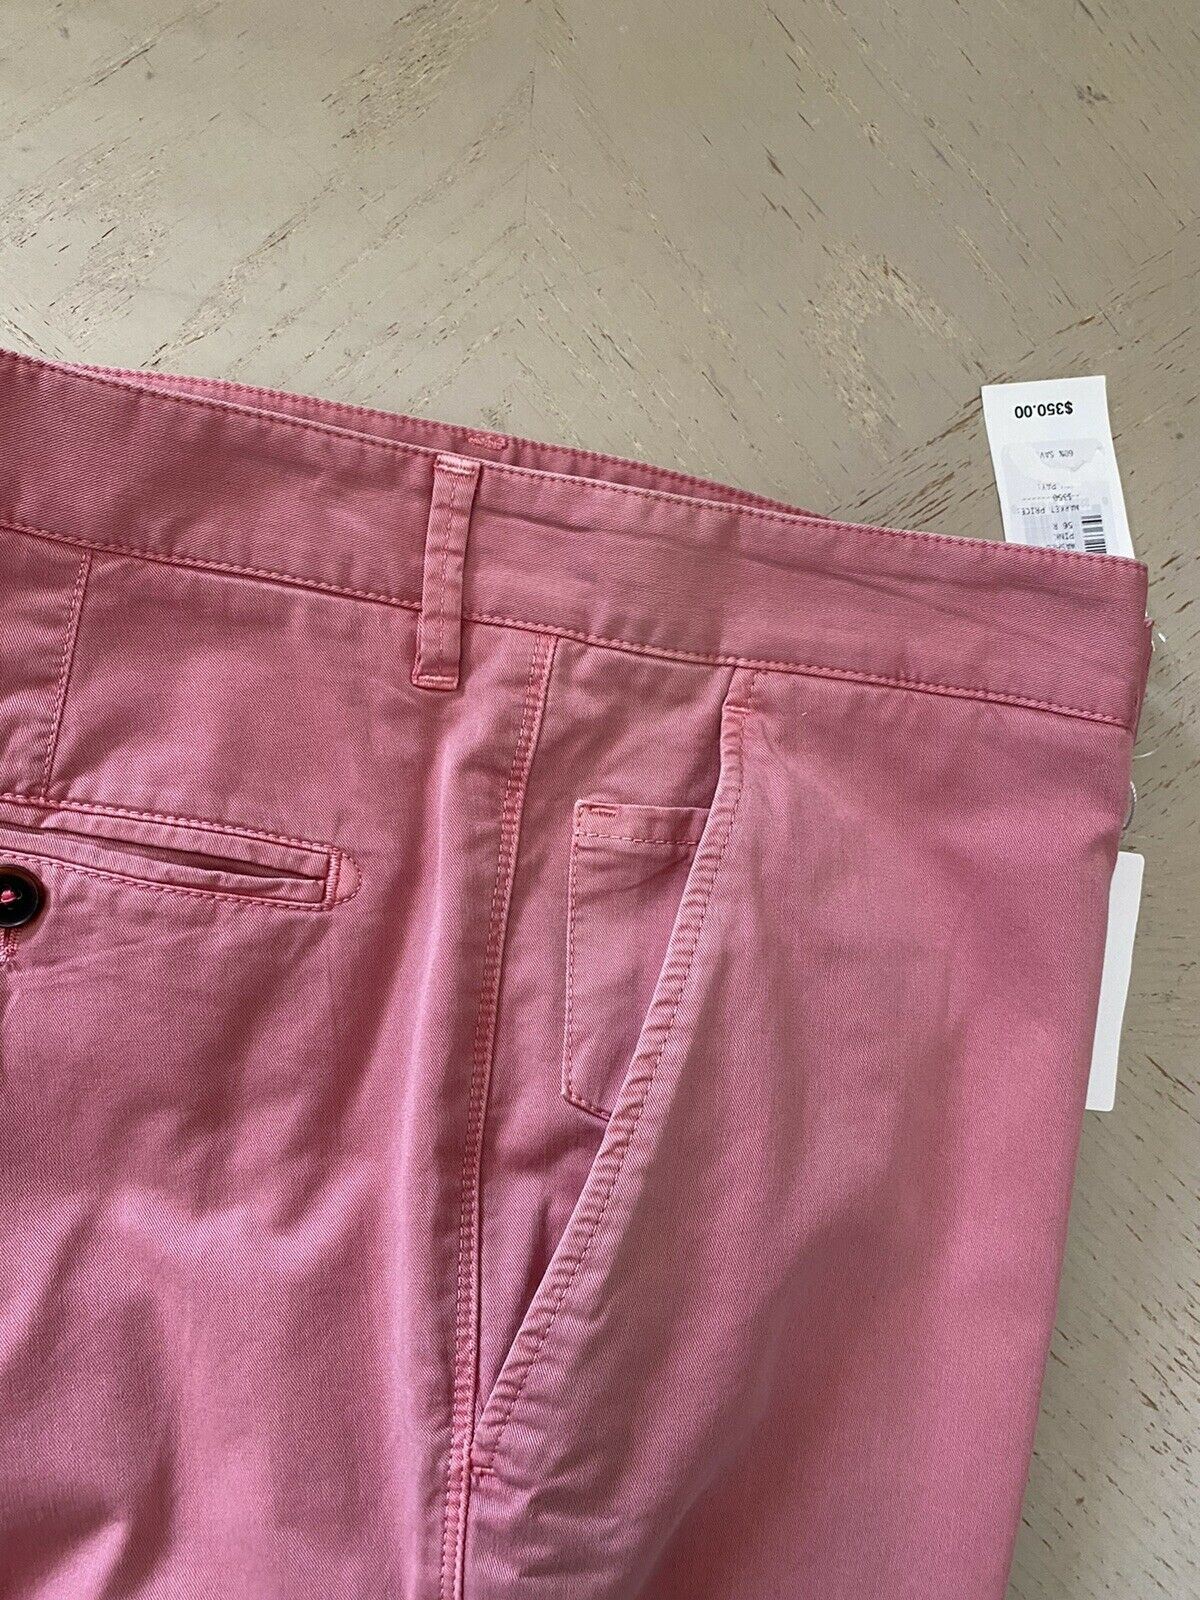 NWT $350 Eidos Mens Pants Pink 38 US Italy